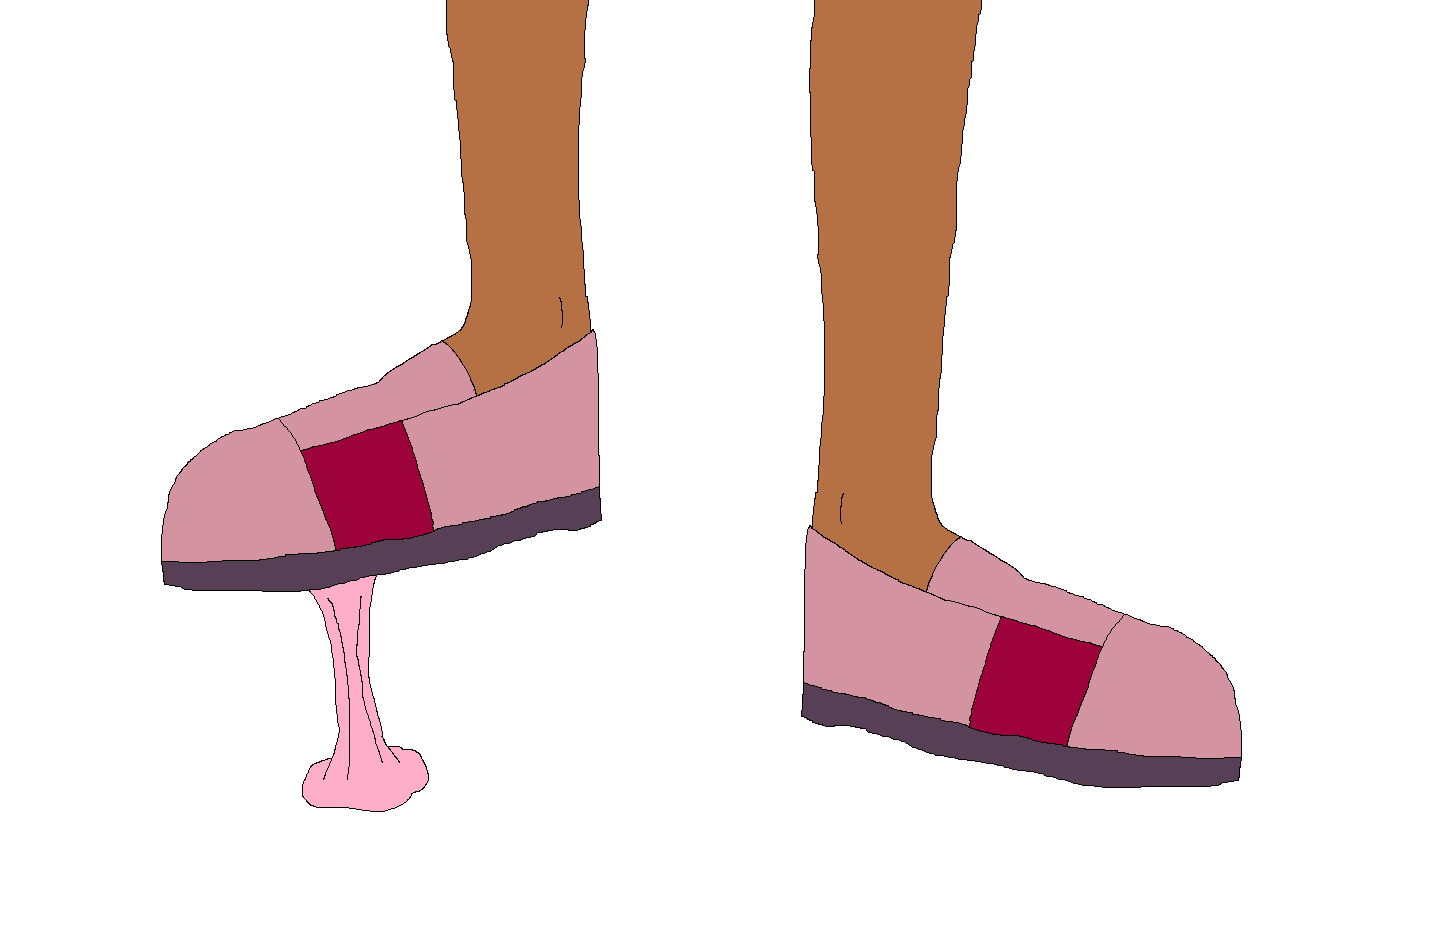 Serena's feet and red + pink toenails by ChipmunkRaccoonOz on DeviantArt